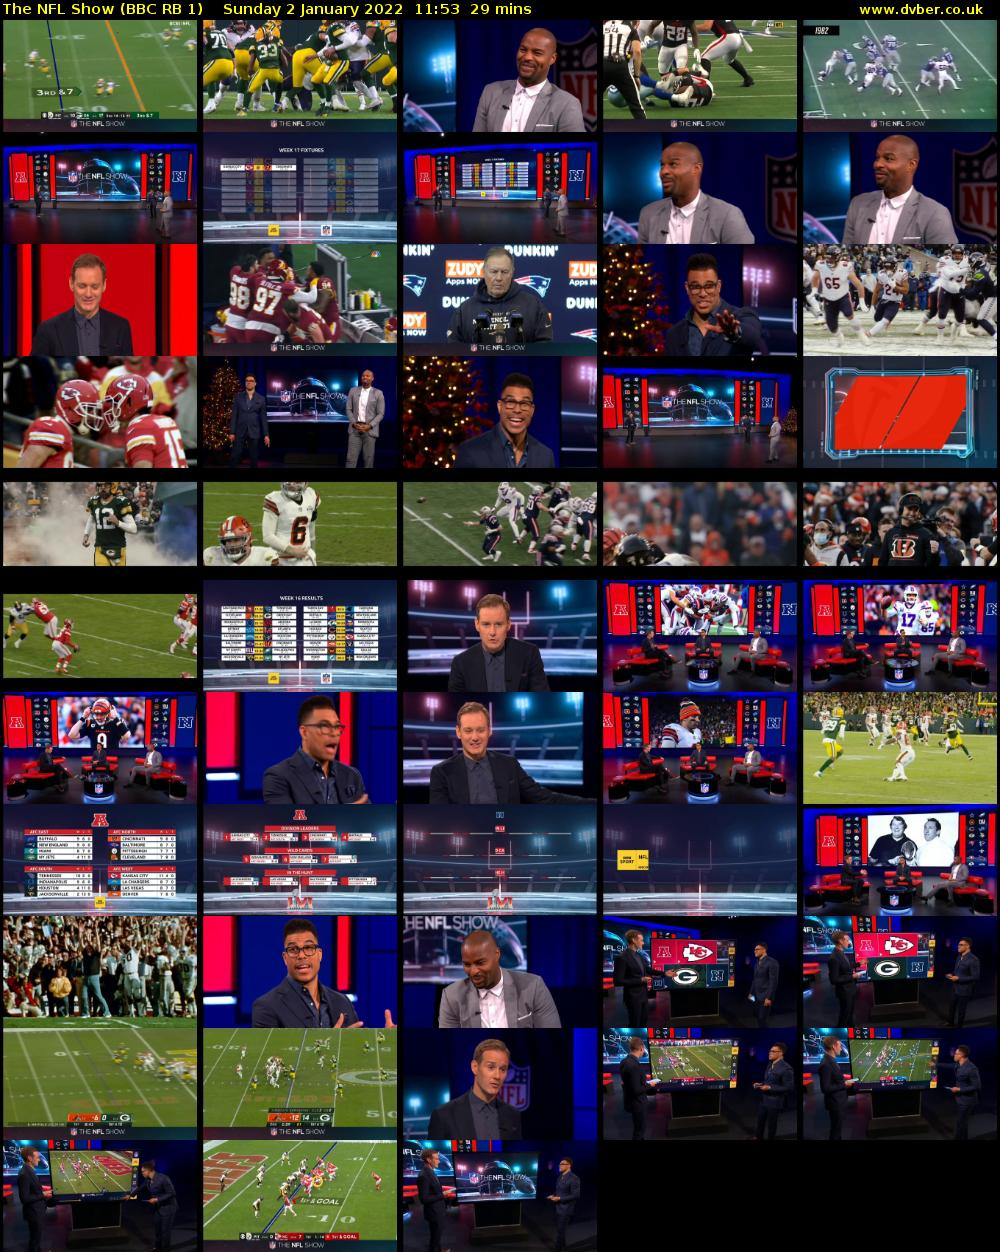 The NFL Show (BBC RB 1) Sunday 2 January 2022 11:53 - 12:22